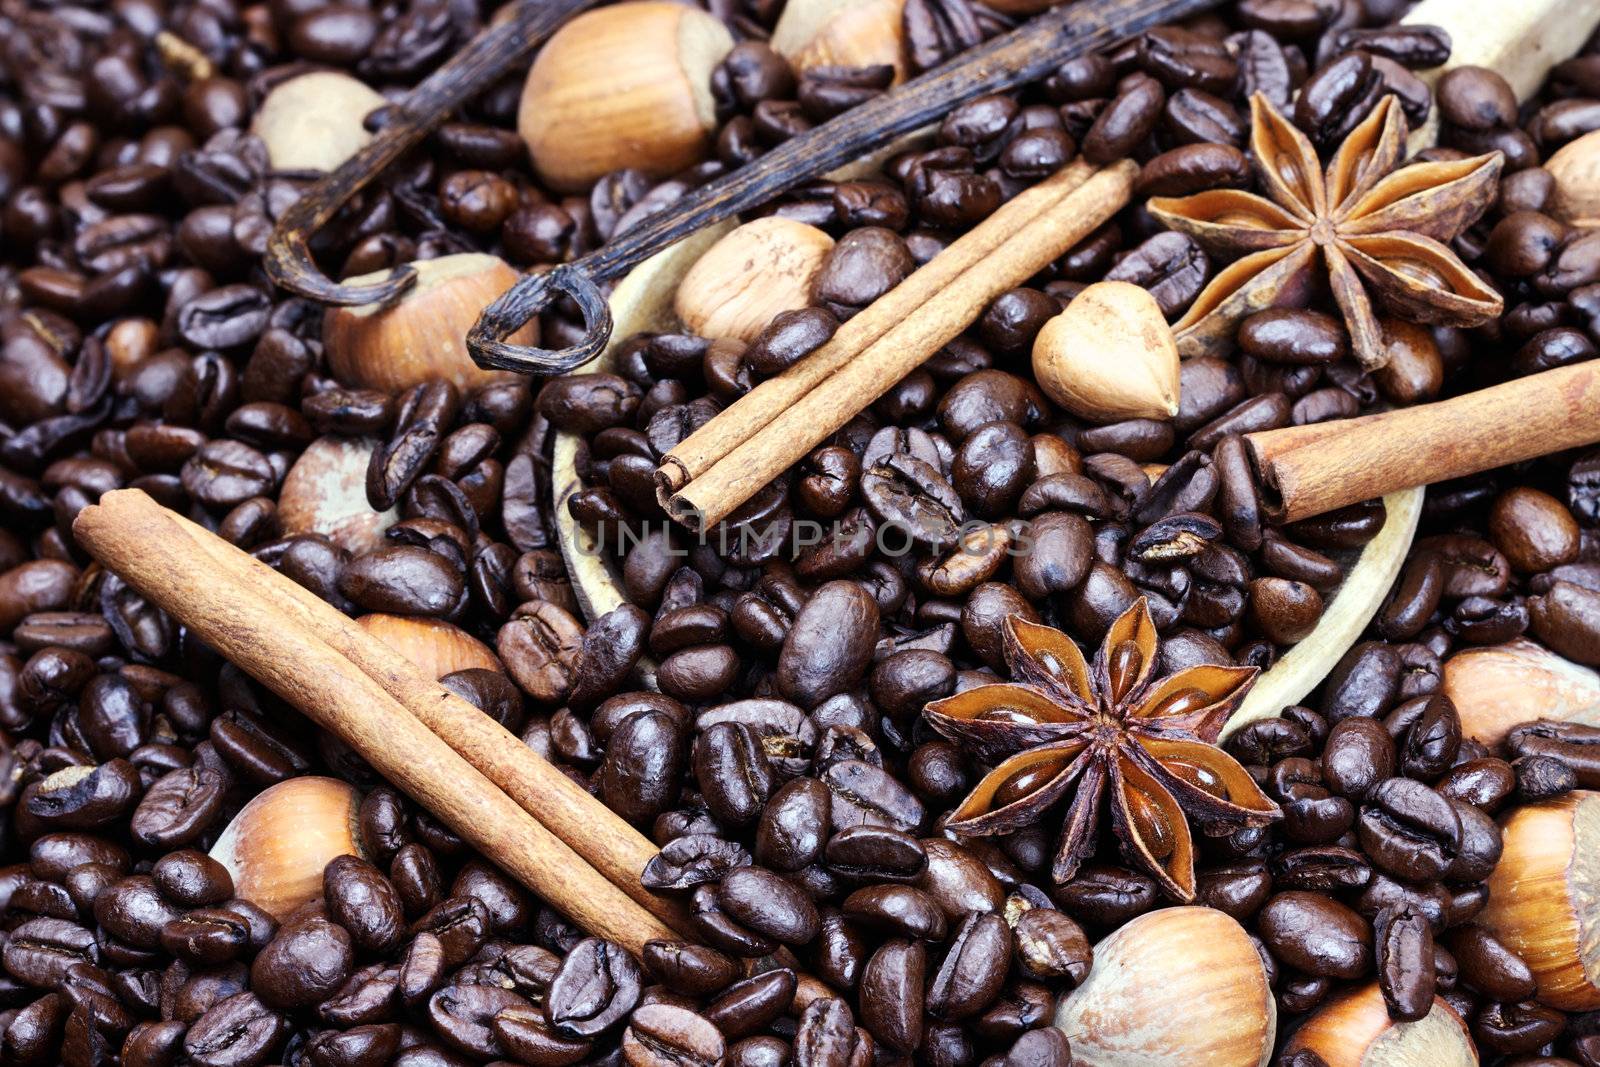 Gourmet Flavored Coffee Ingredients by StephanieFrey